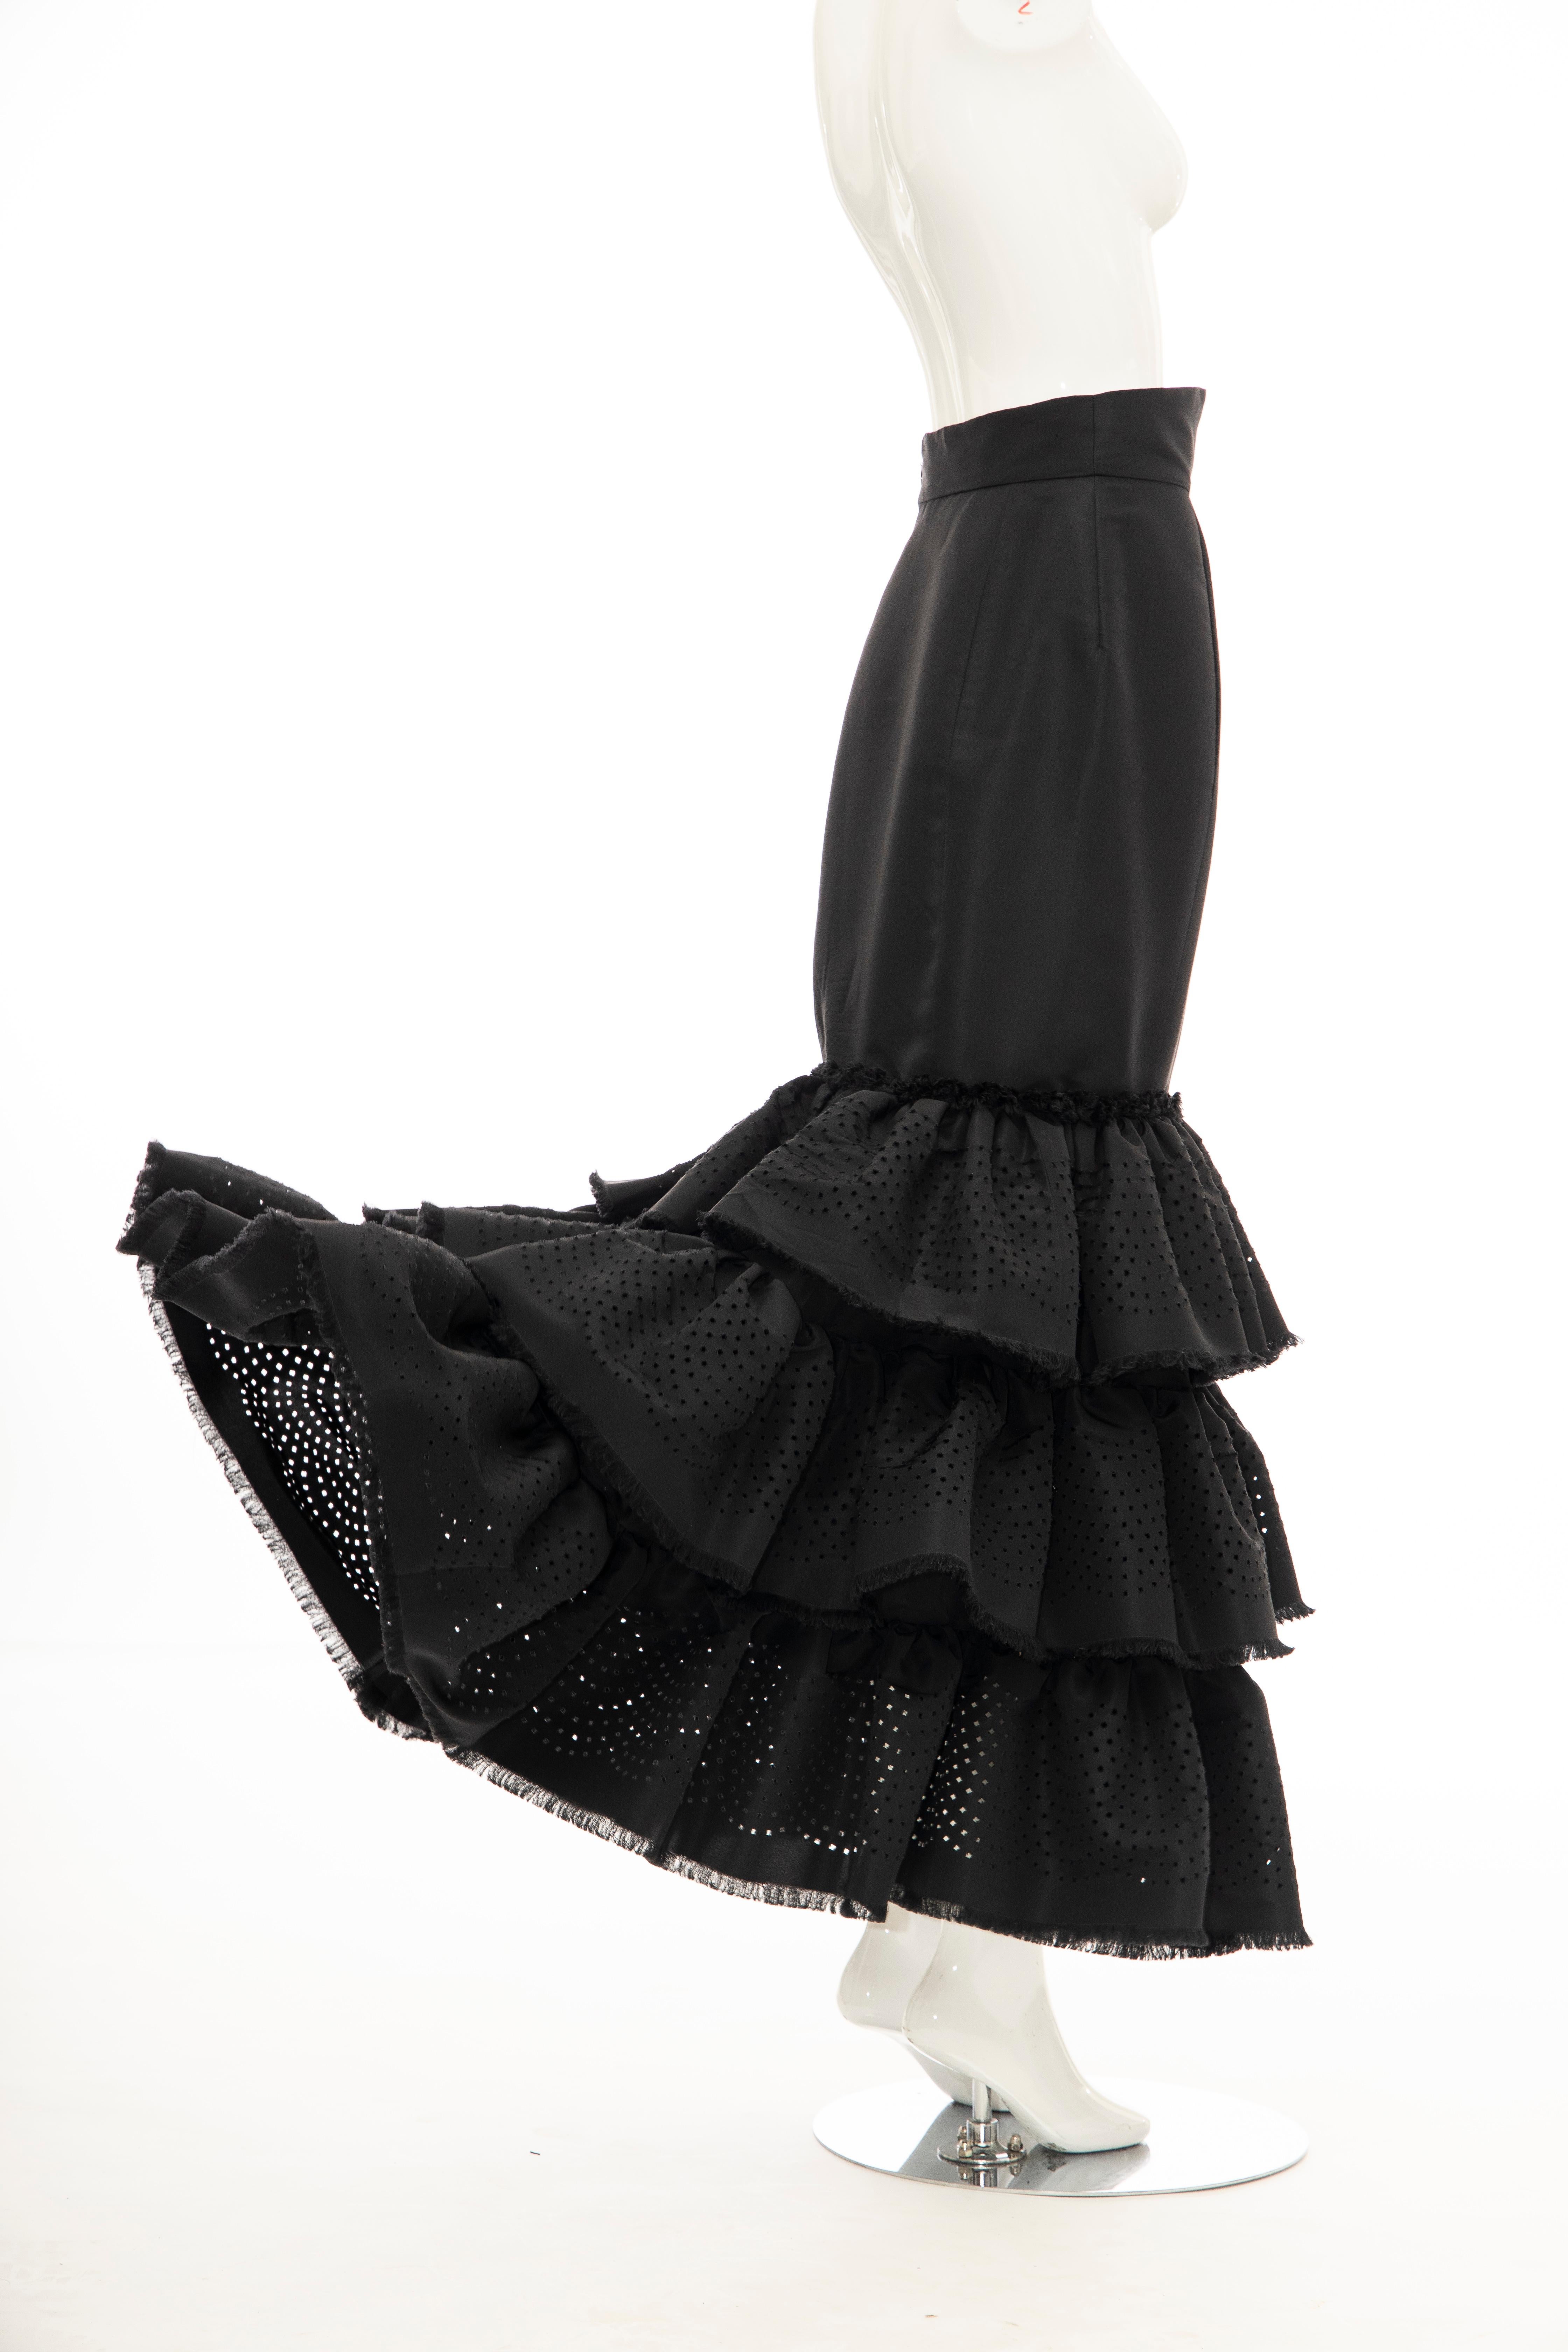 Oscar de la Renta Black Punched Silk Faille Evening Skirt, Fall 2001 For Sale 6